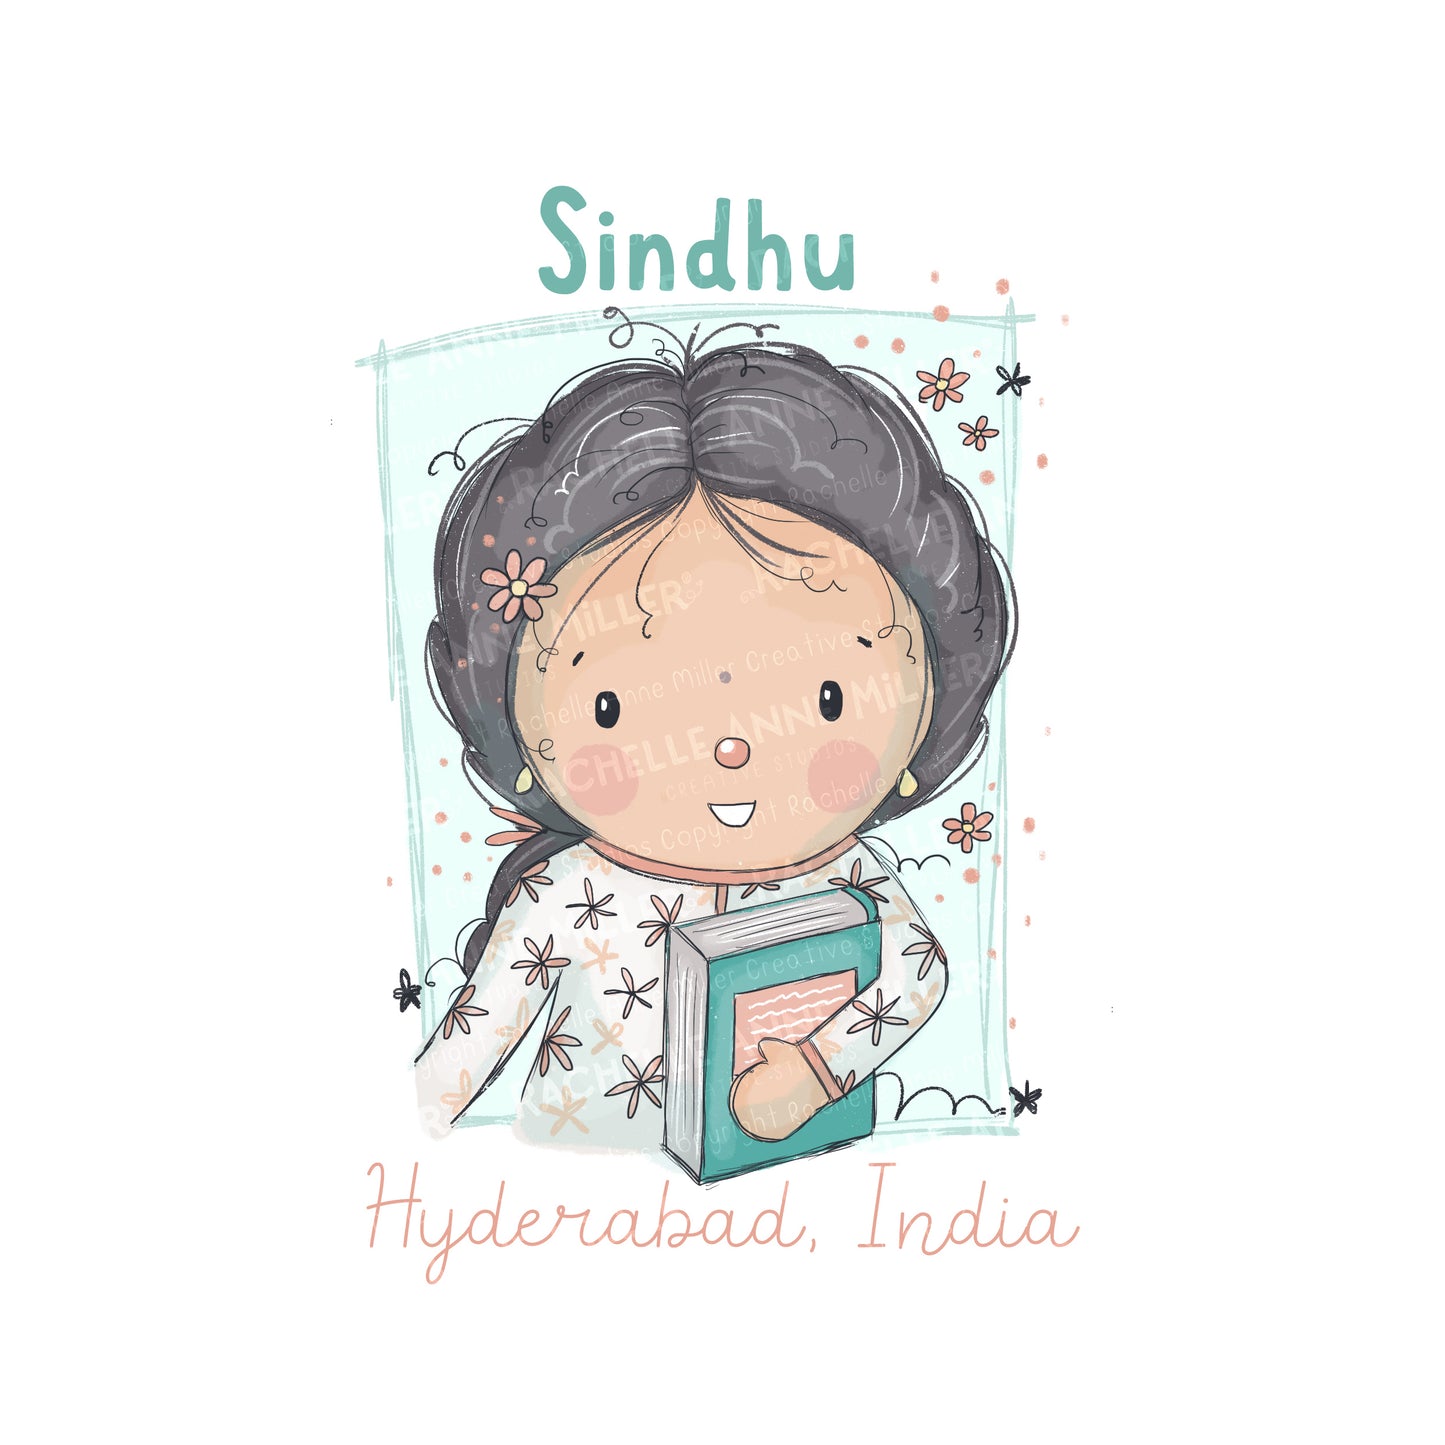 'Sindhu's Books' Profile Digital Stamp